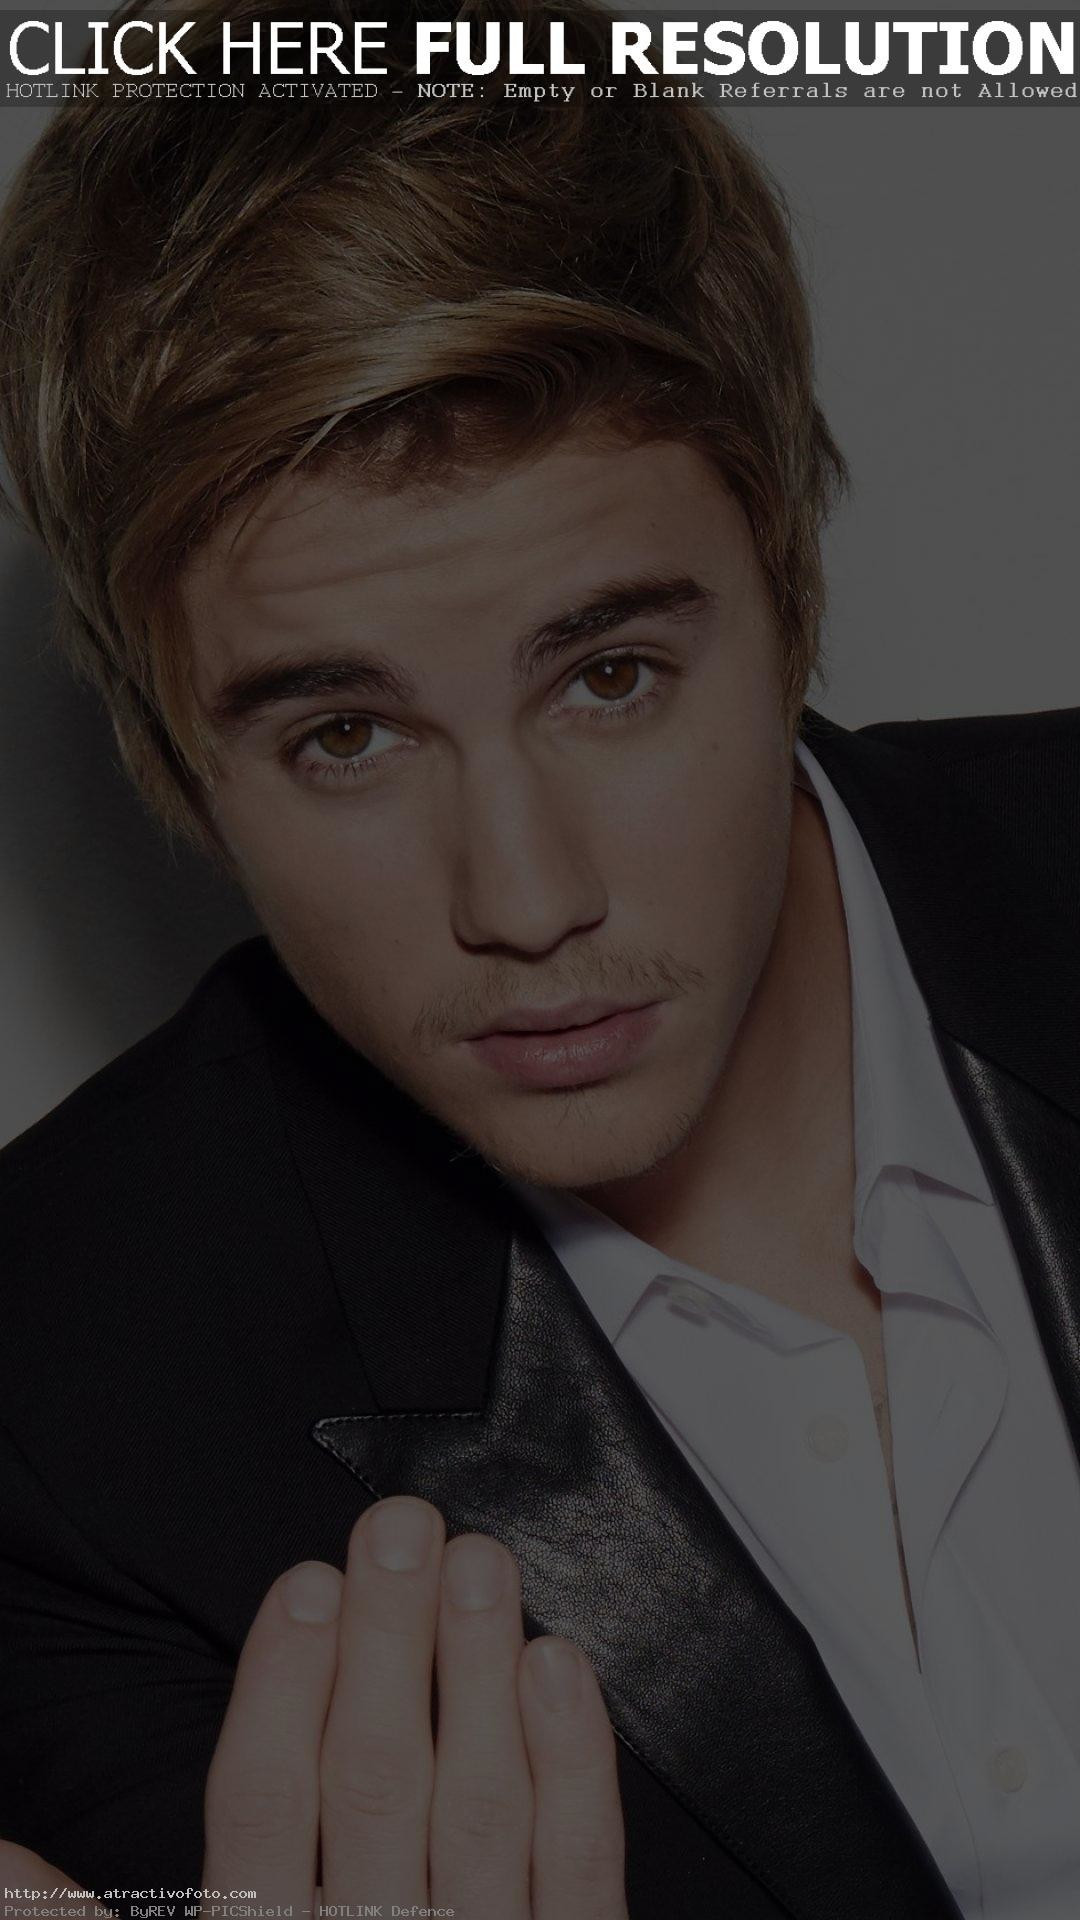 Justin Bieber Hairstyle Pictures Lovely Justin Bieber - Warren Street Tube Station - HD Wallpaper 